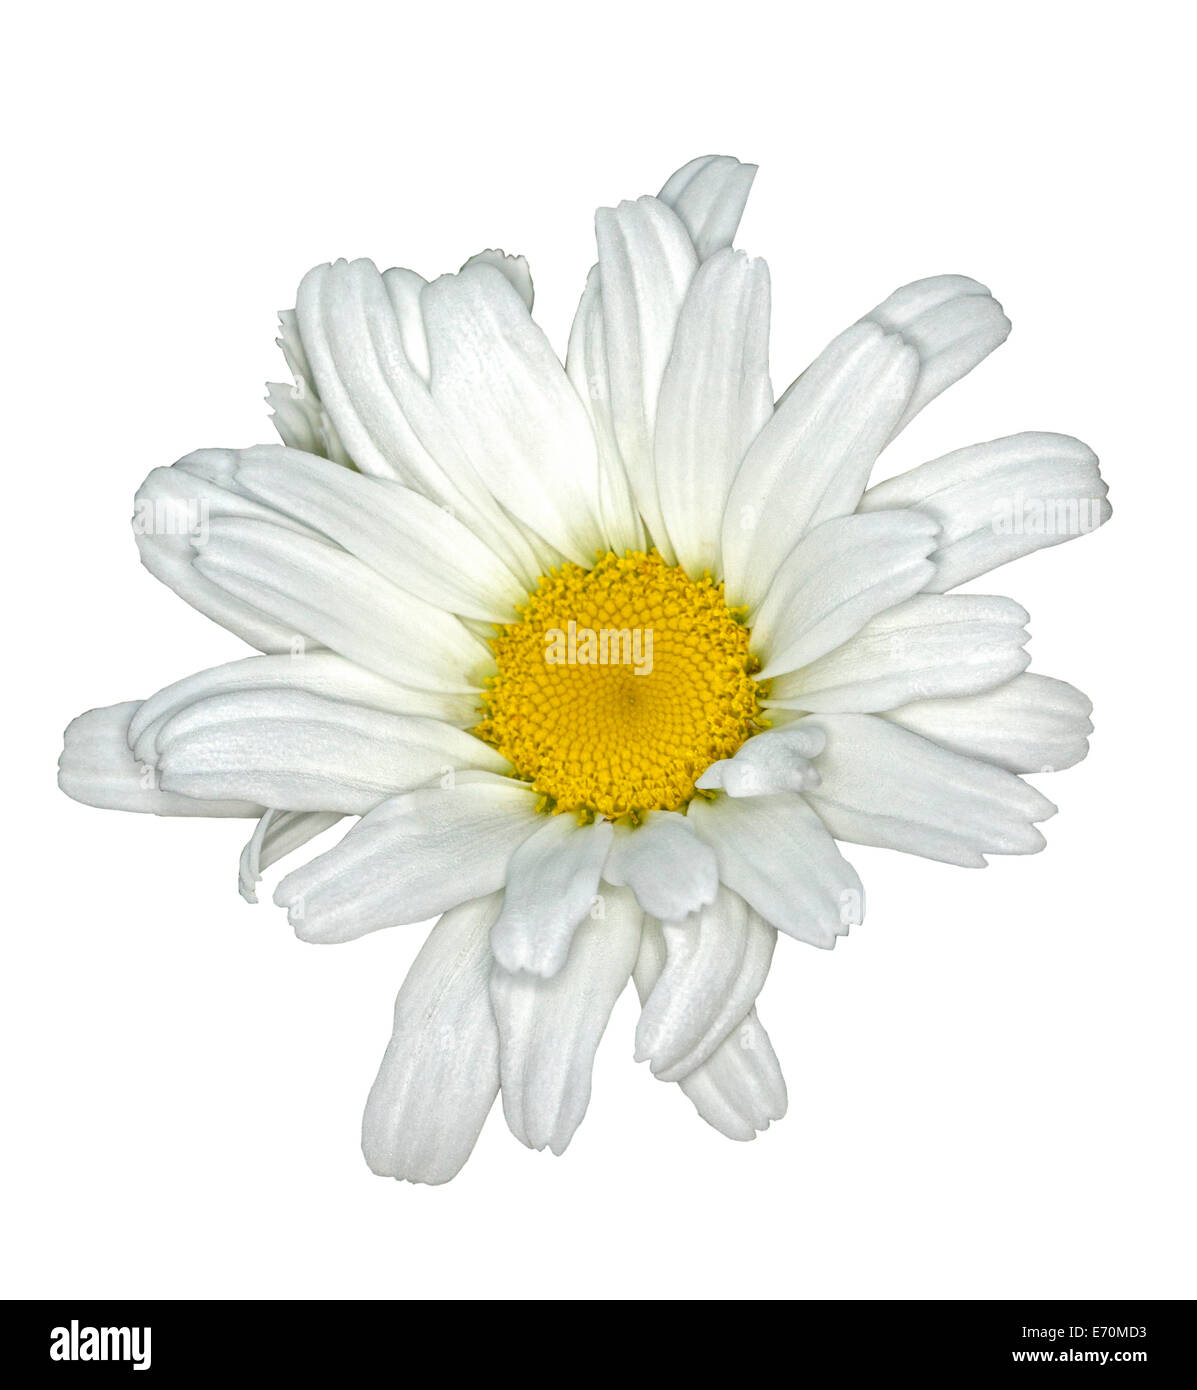 White flowers of Leucanthemun 'Daisy May' - Shasta Daisy  with yellow centre against plain white background Stock Photo